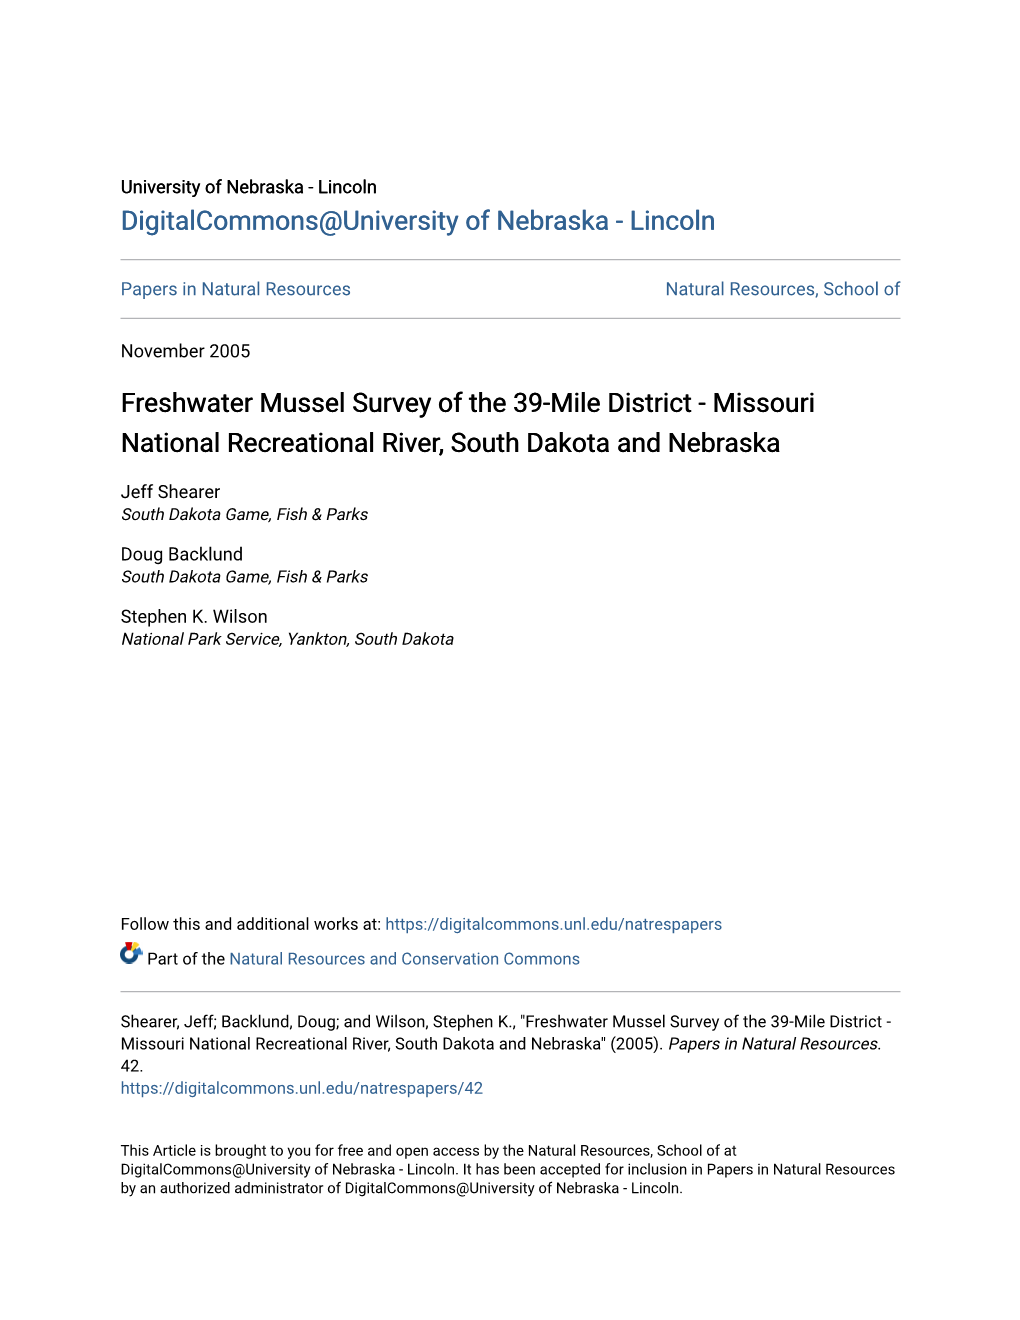 Freshwater Mussel Survey of the 39-Mile District - Missouri National Recreational River, South Dakota and Nebraska